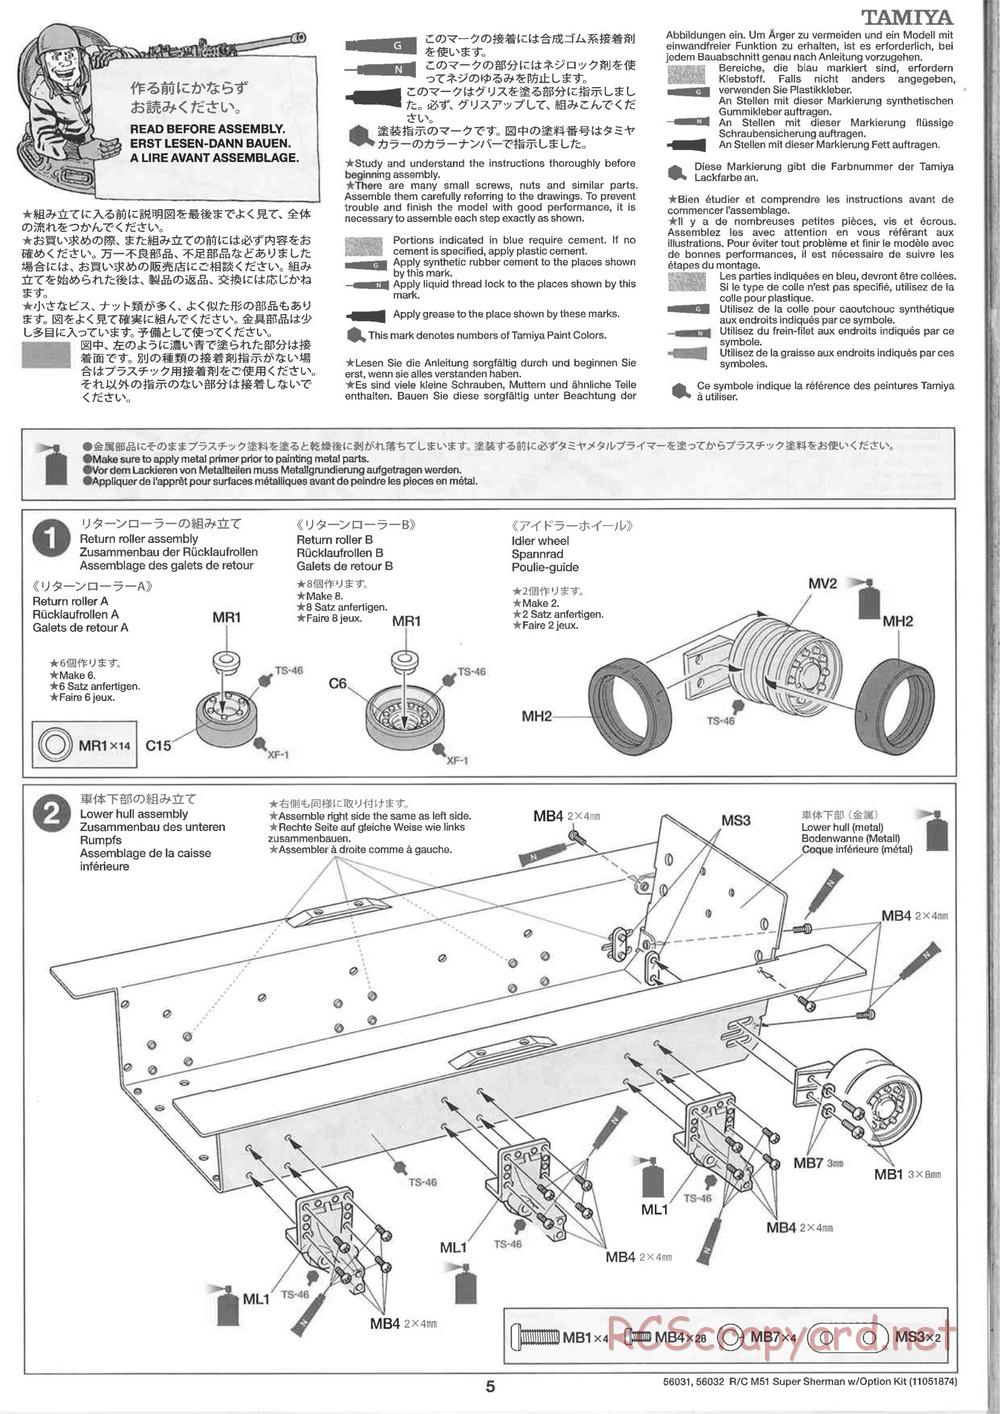 Tamiya - Super Sherman M-51 - 1/16 Scale Chassis - Manual - Page 5